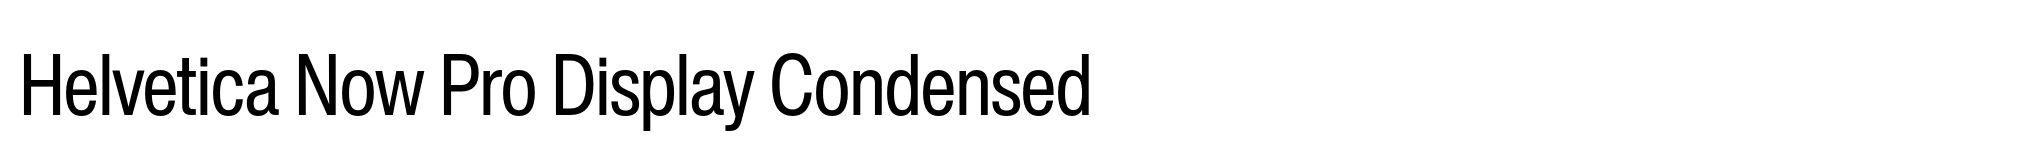 Helvetica Now Pro Display Condensed image